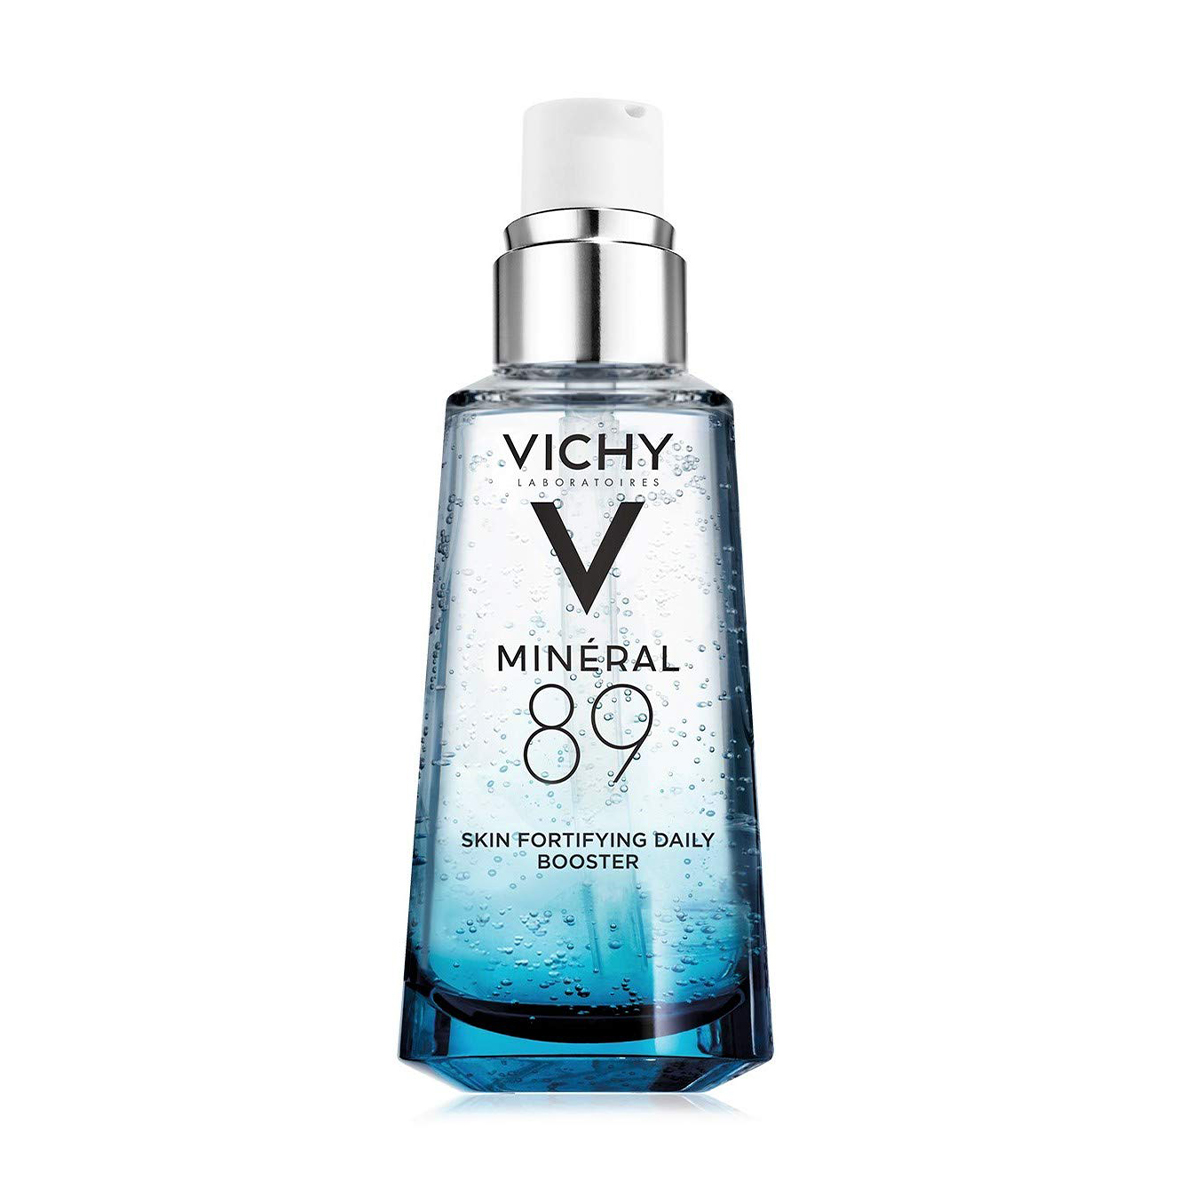 Vichy mineral 89 daily skin Booster serum and hidratáló